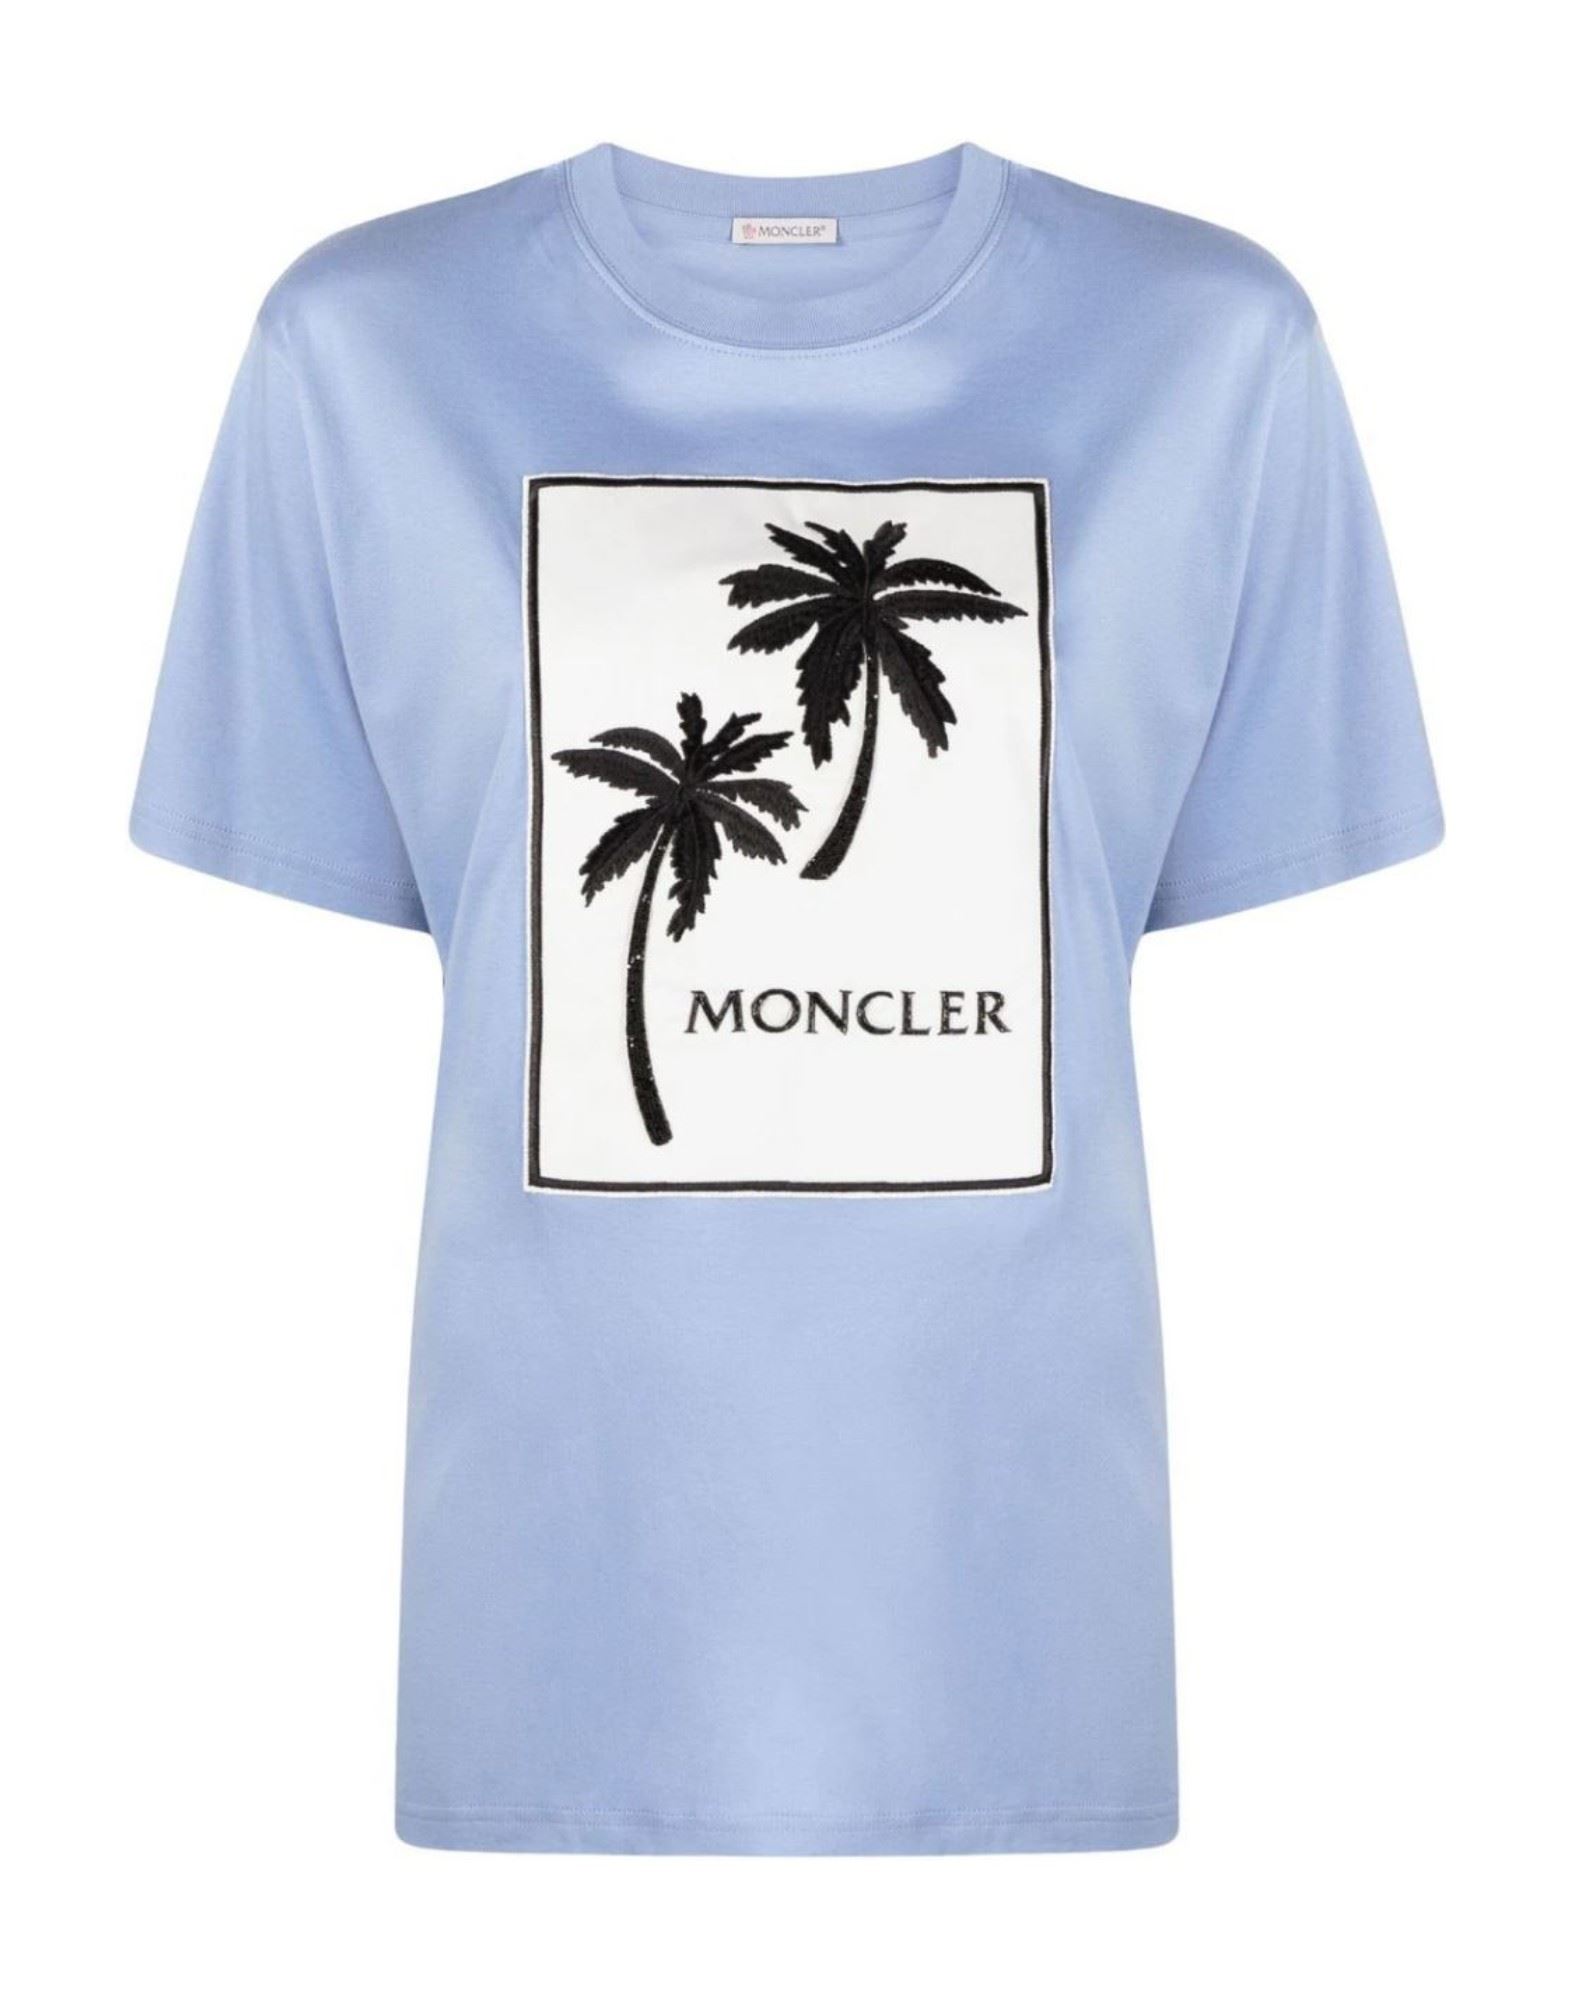 MONCLER T-shirts Damen Blau von MONCLER